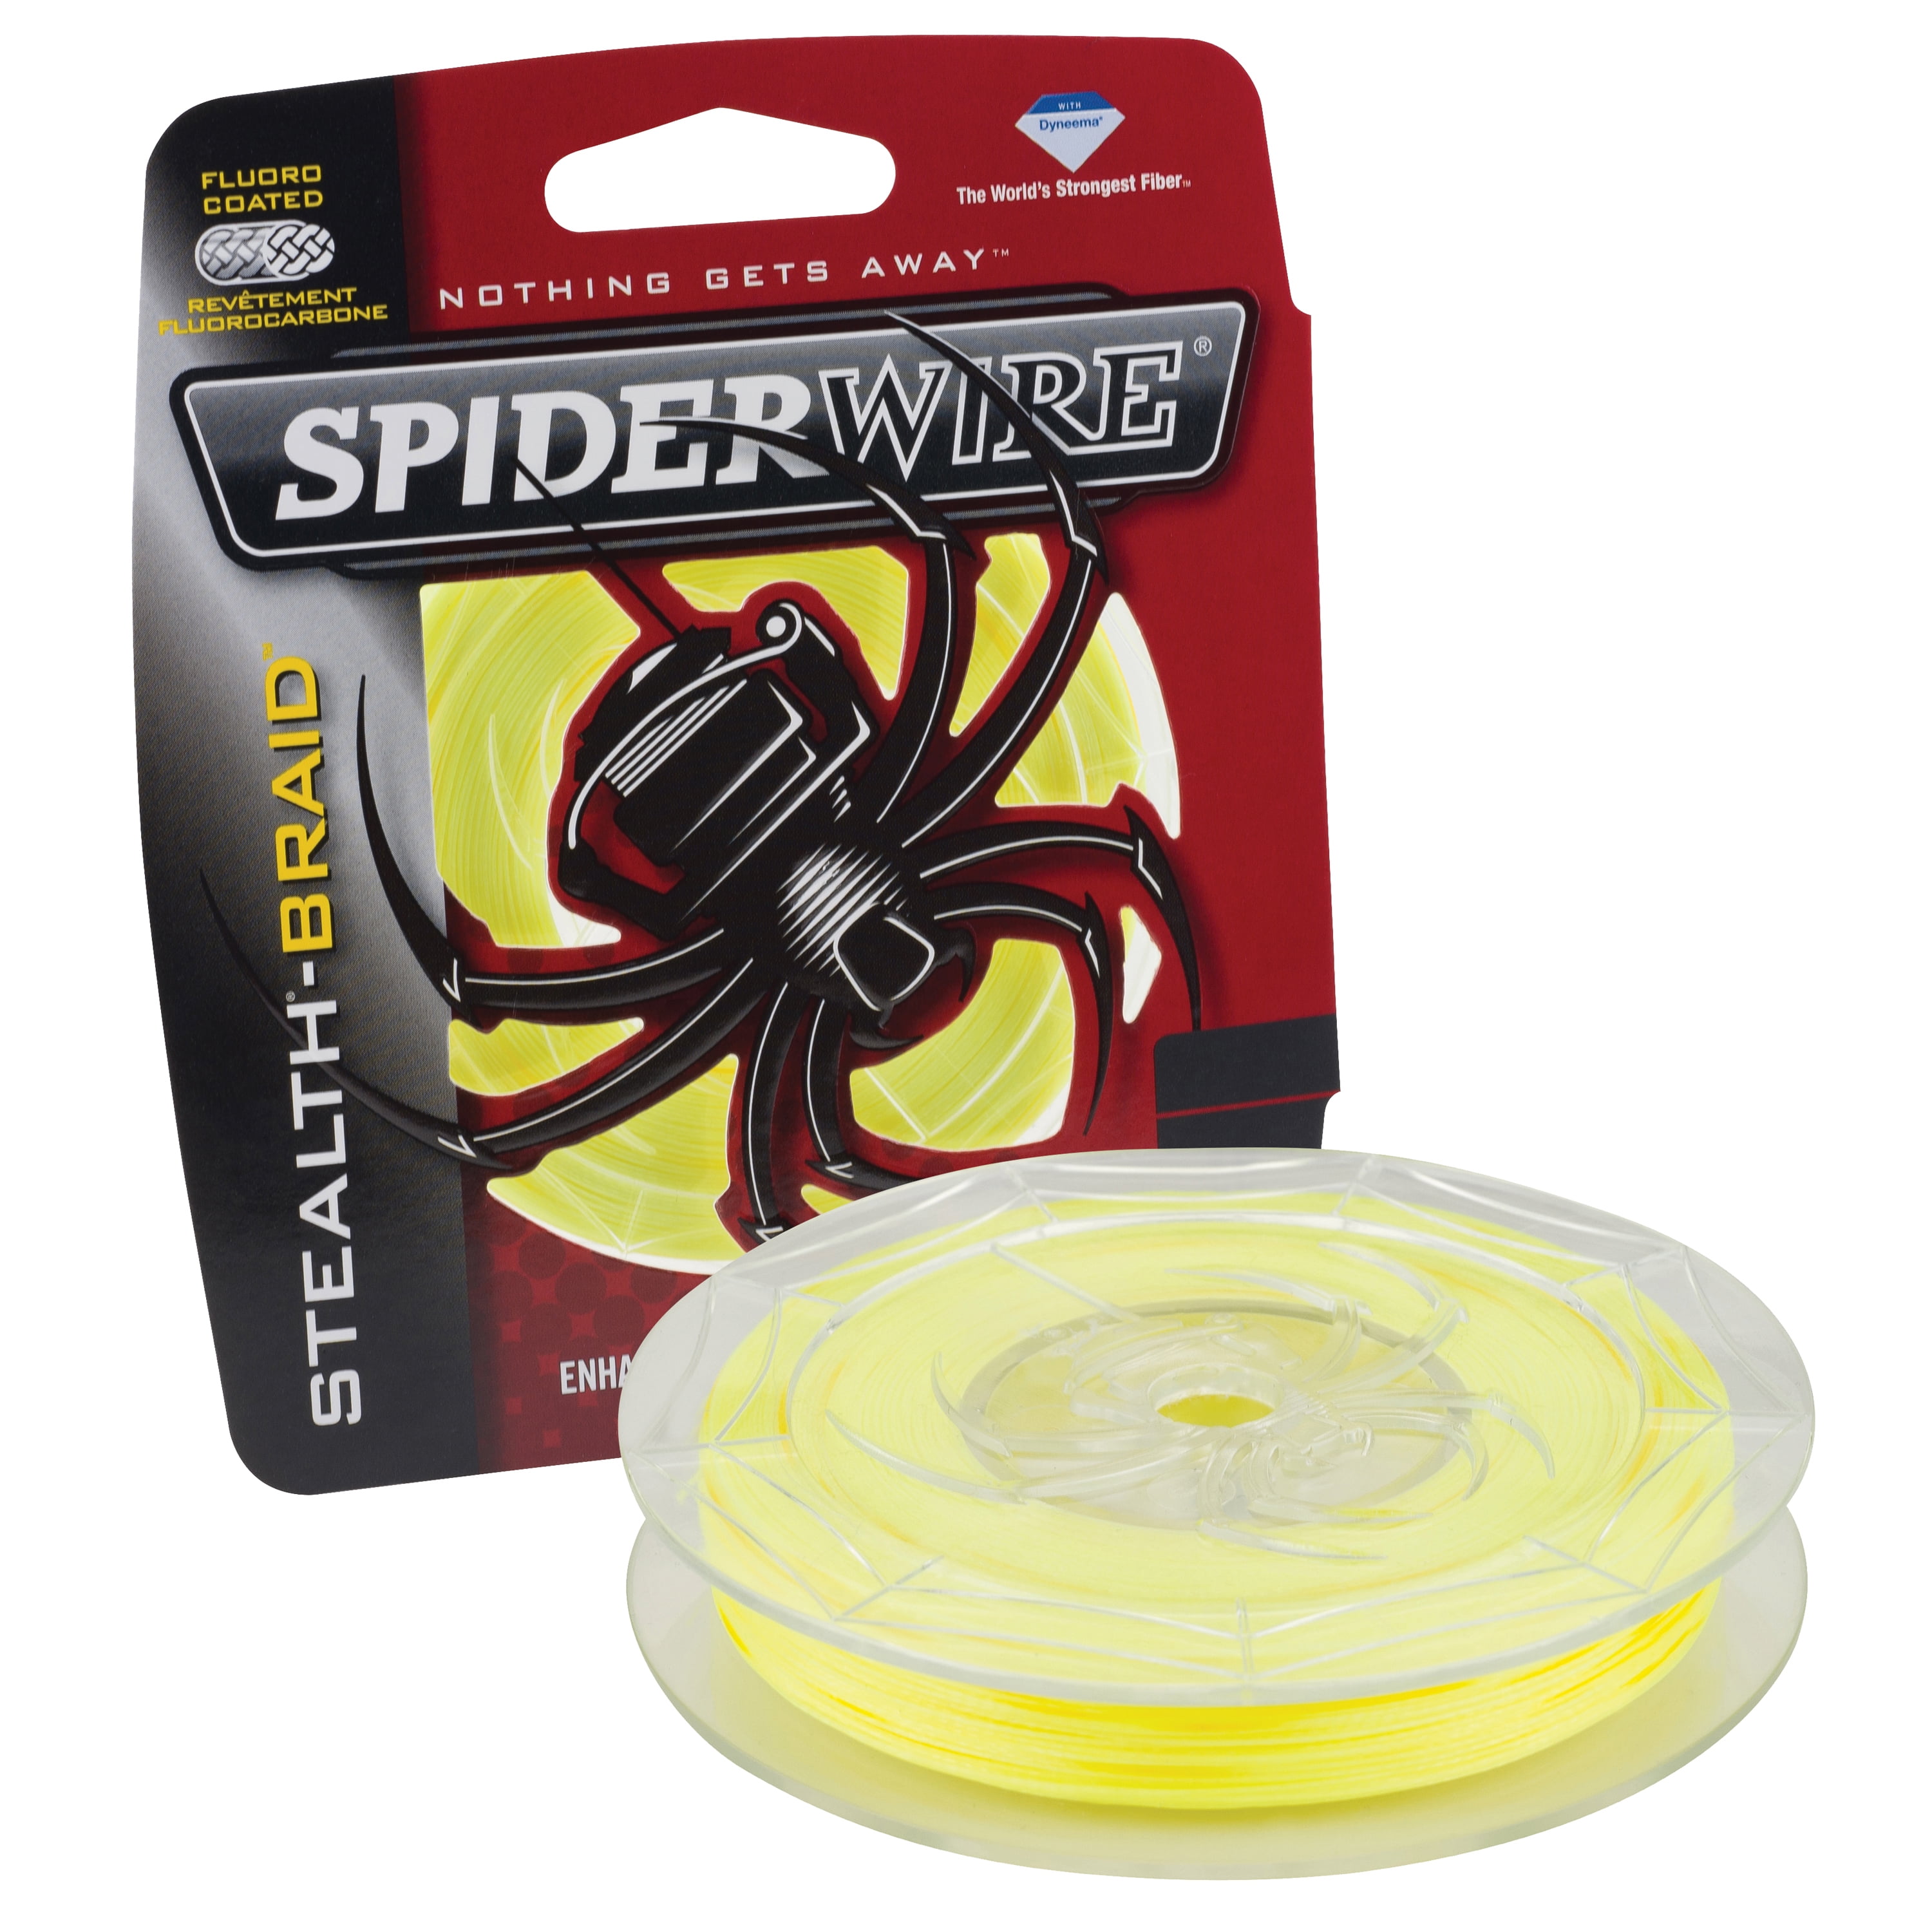 Spiderwire Stealth Braid Fishing Line - 1200 Yards - 50 lb. test